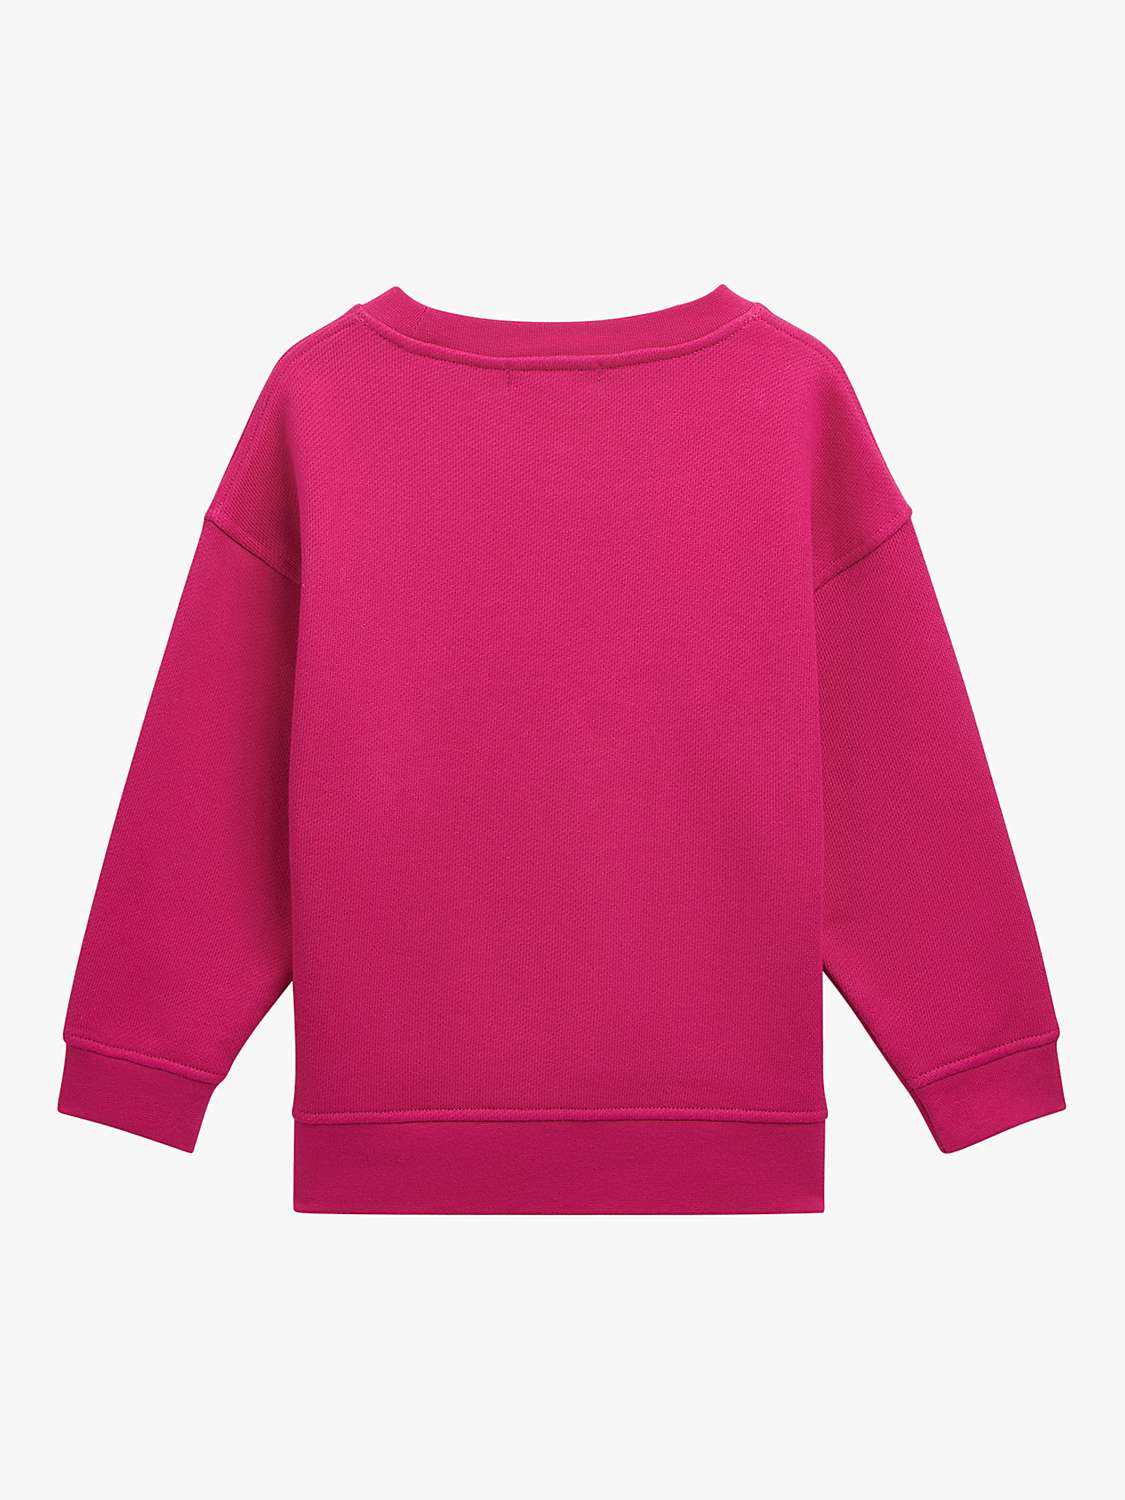 Buy Whistles Kids' Monster Embroidered Sweatshirt, Pink Online at johnlewis.com